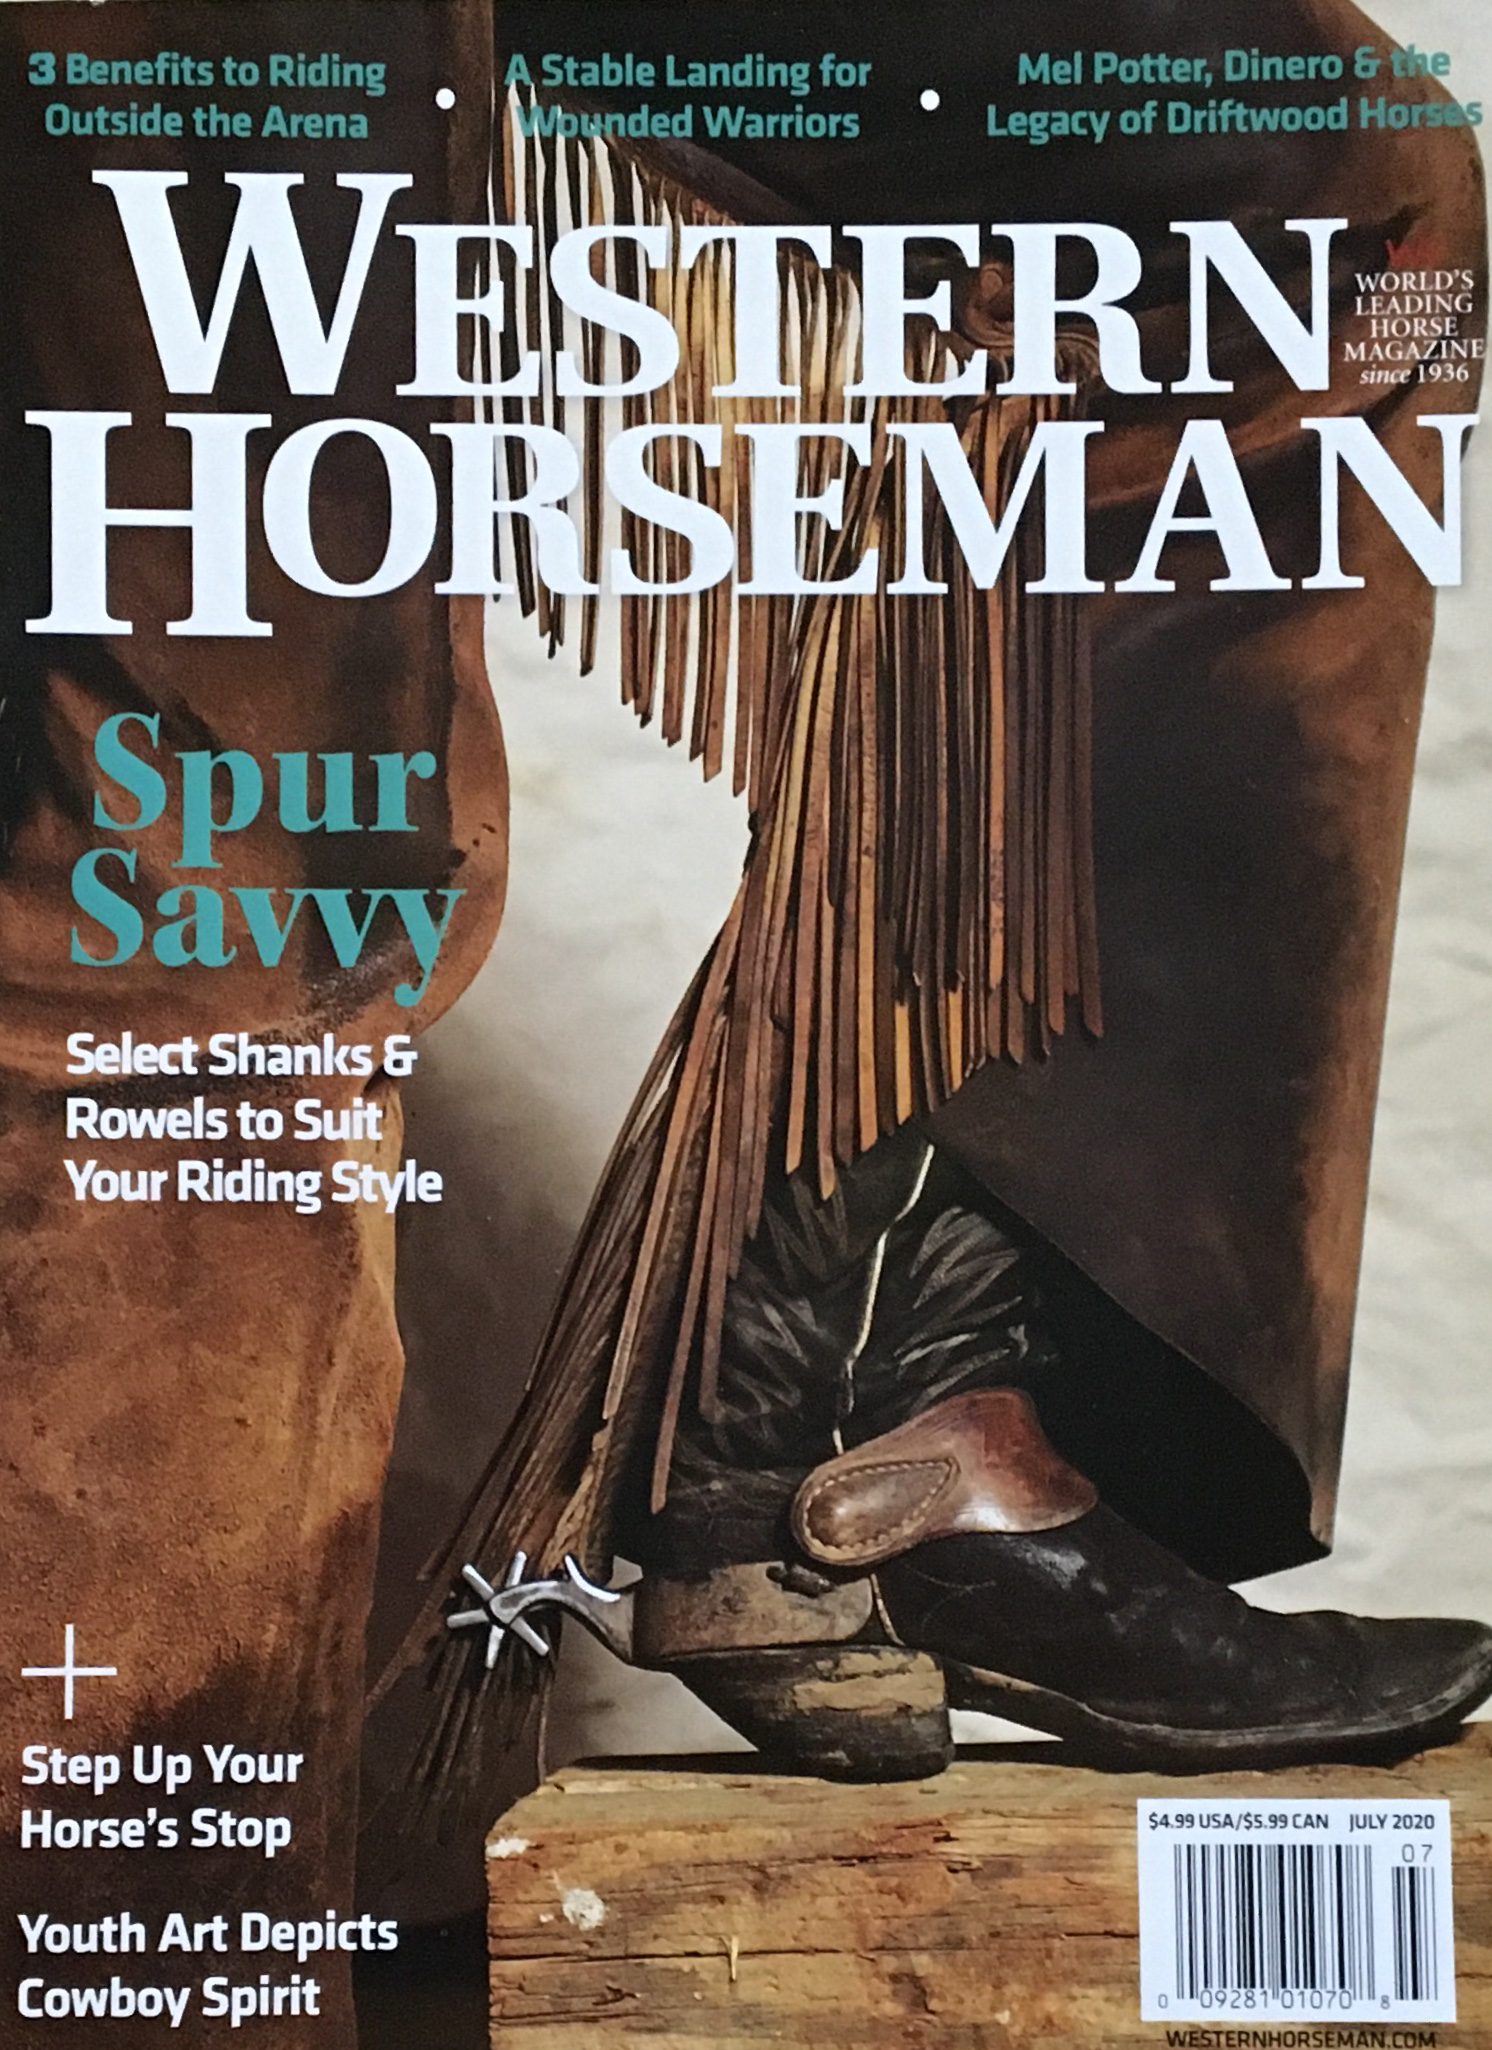 WESTERN HORSEMAN magazine